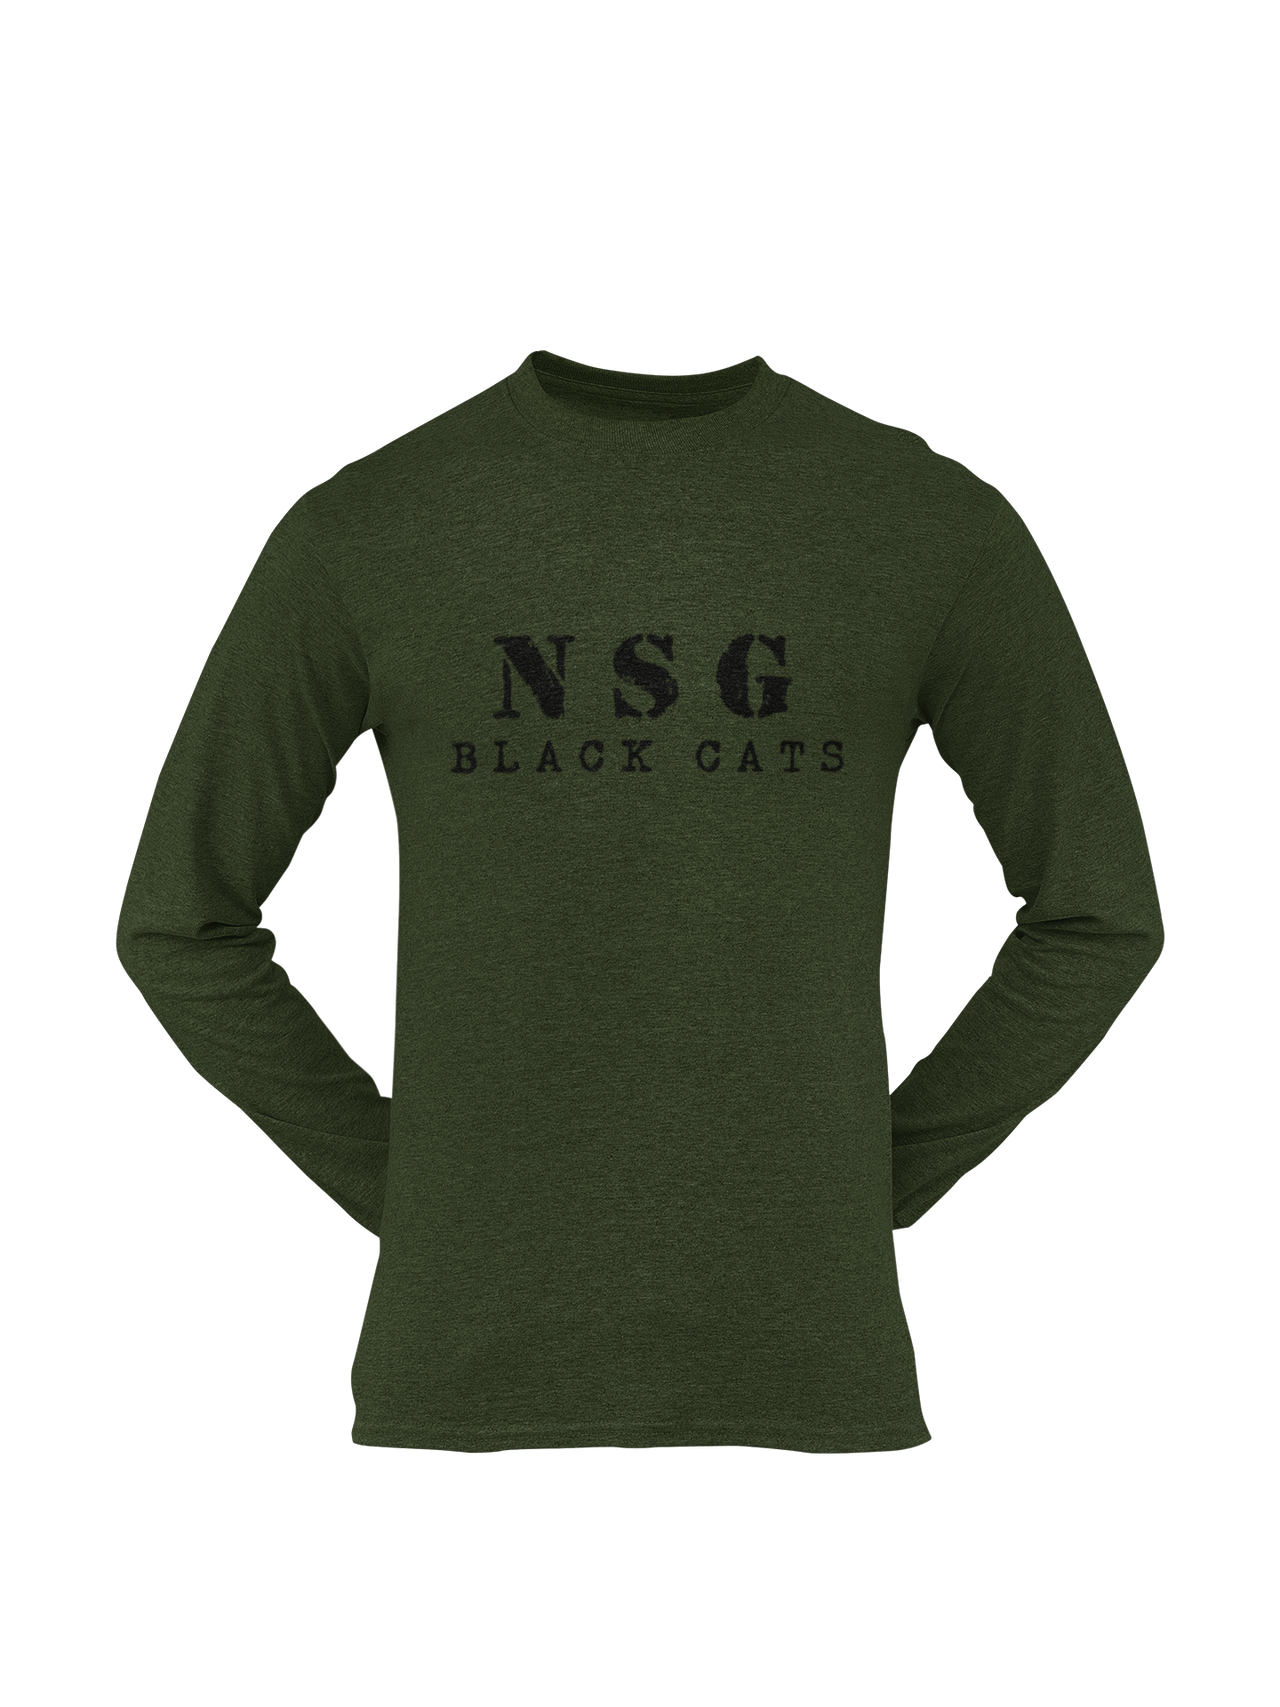 NSG T-shirt - NSG - Black Cats (Men)